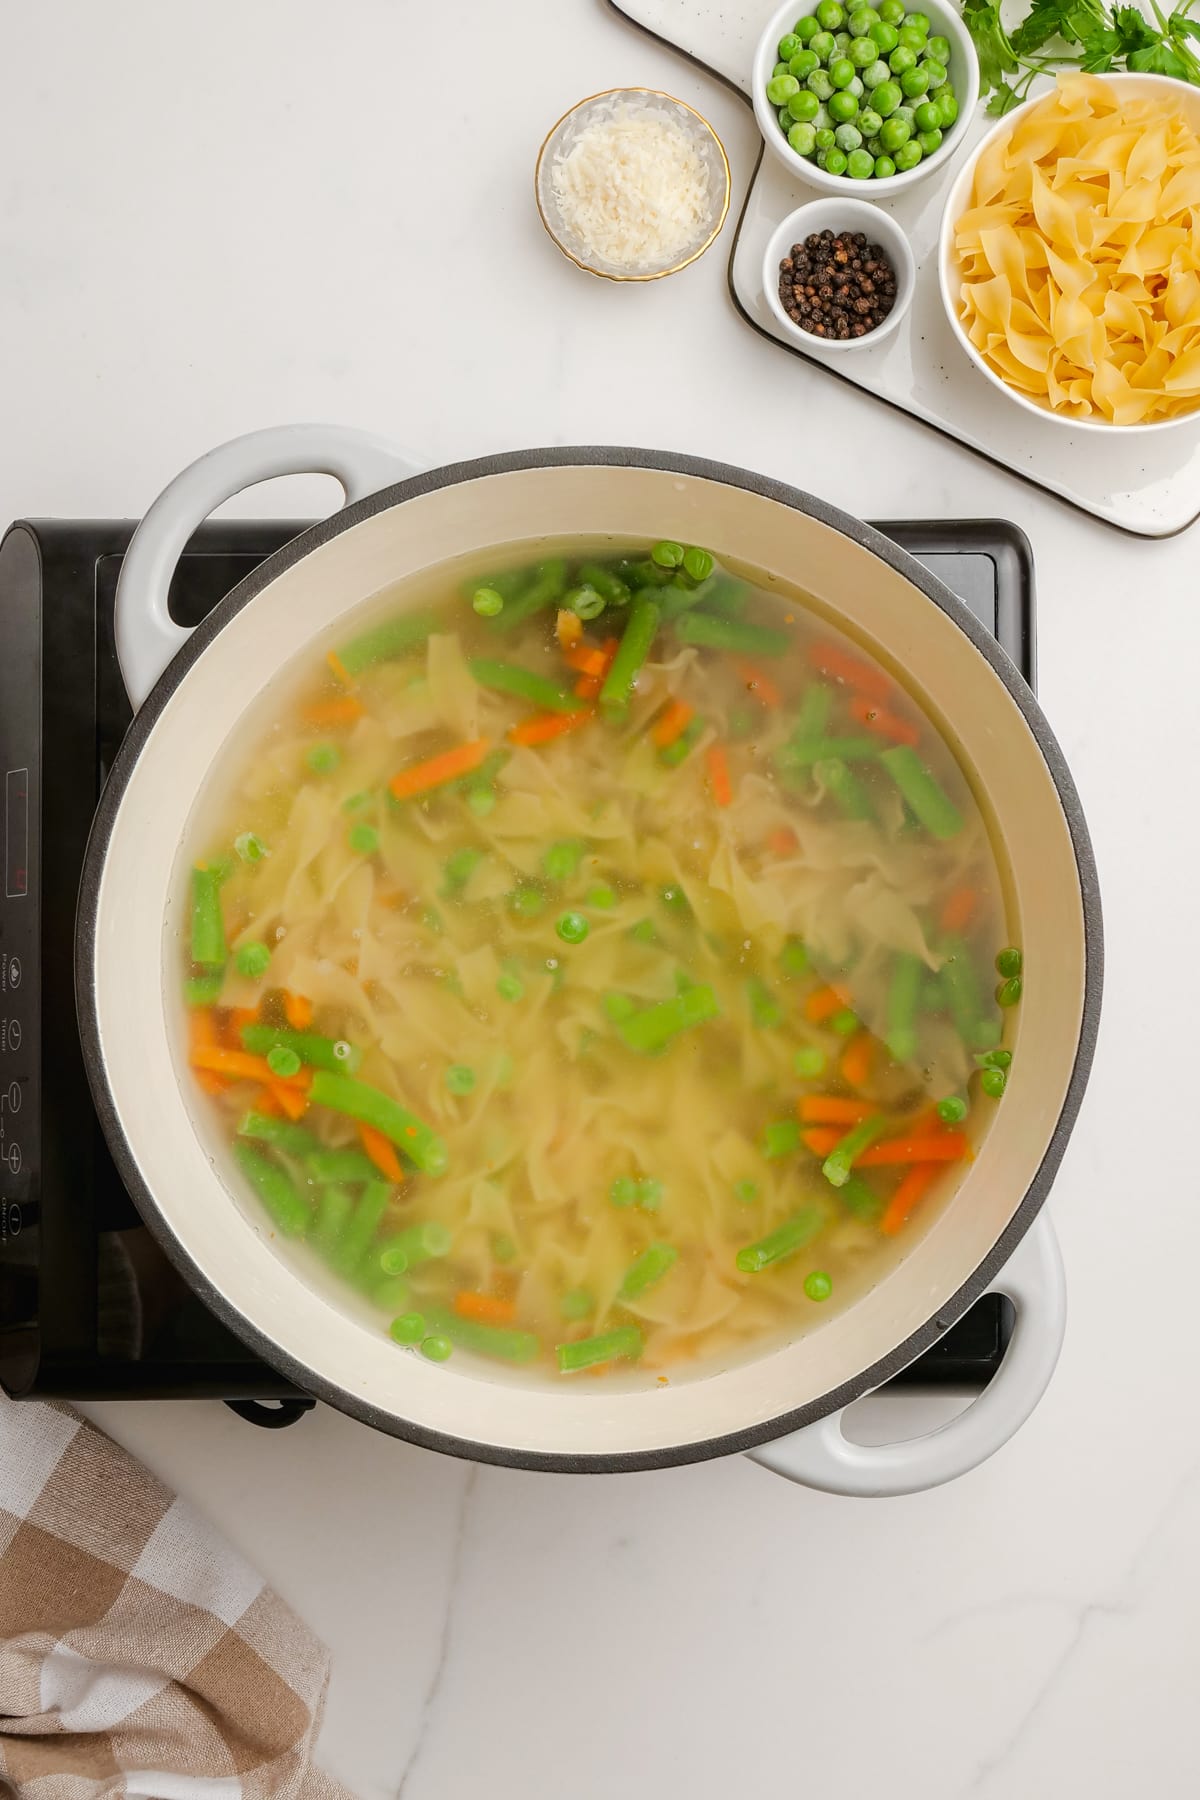 tuna-noodle-casserole ingredients in pot